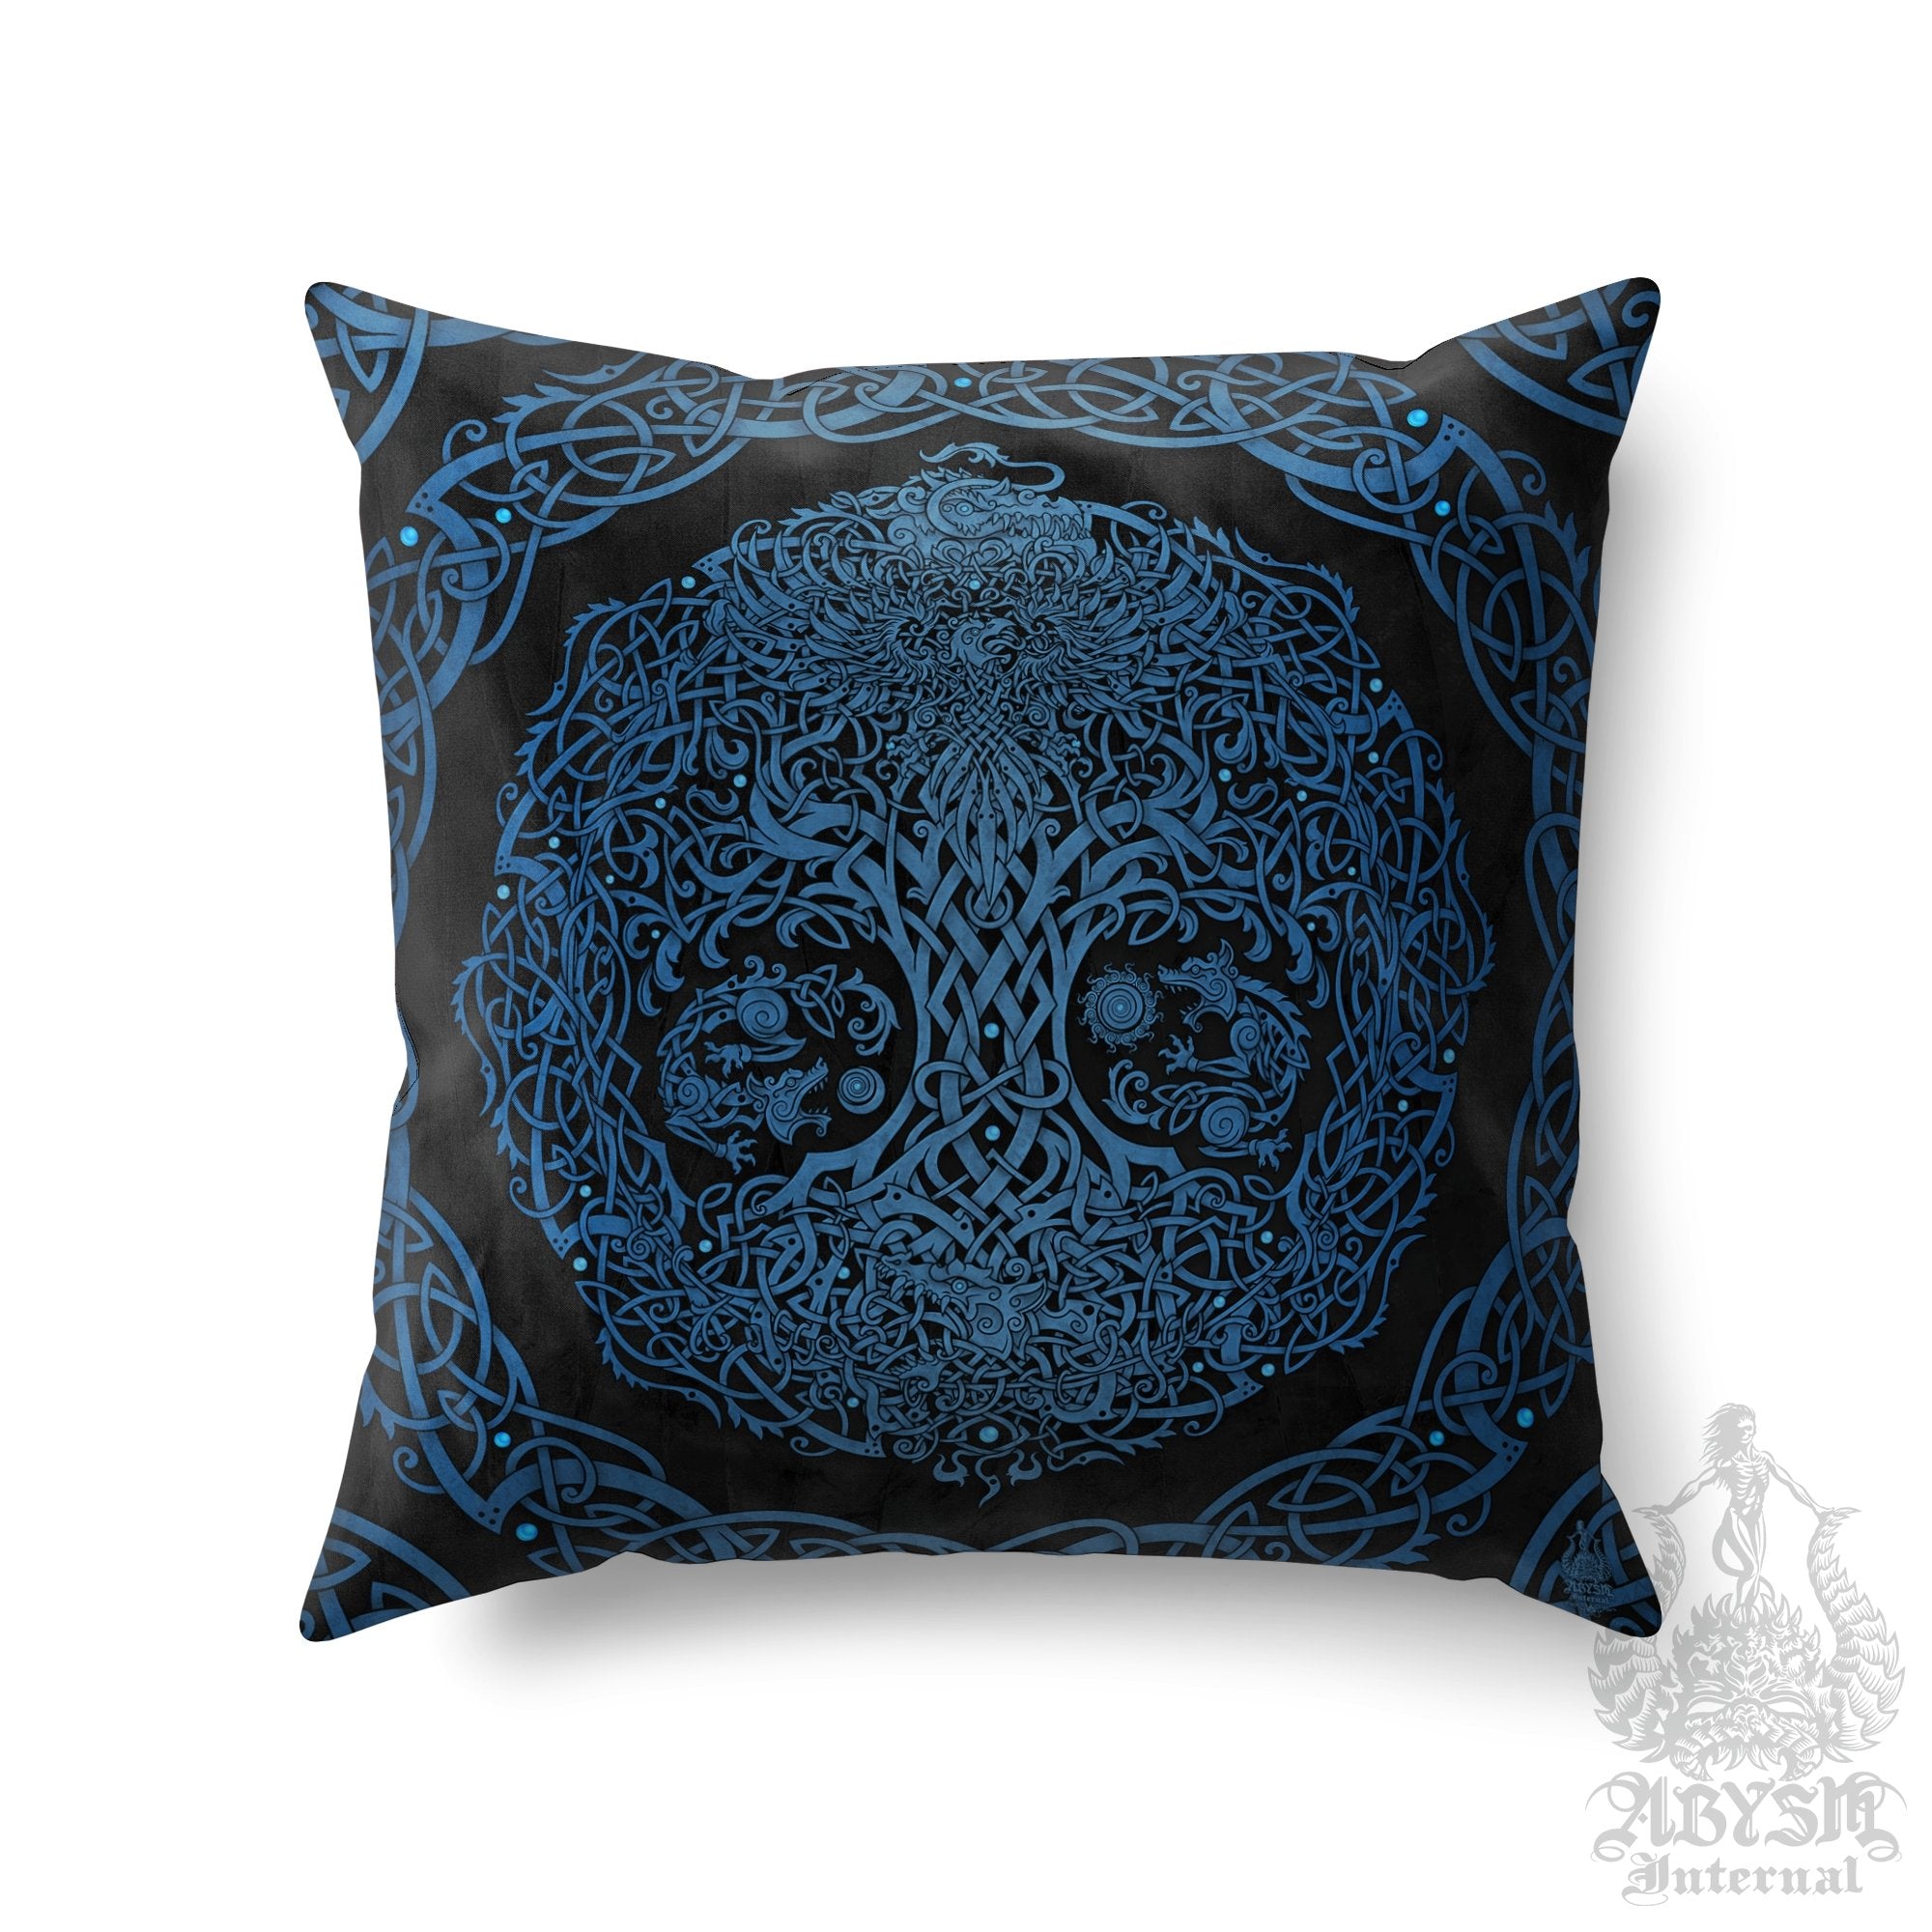 Viking Throw Pillow, Norse Decorative Accent Cushion, Yggdrasil, Gamer Room Decor, Nordic Art, Alternative Home - Tree of Life, Black & Blue - Abysm Internal